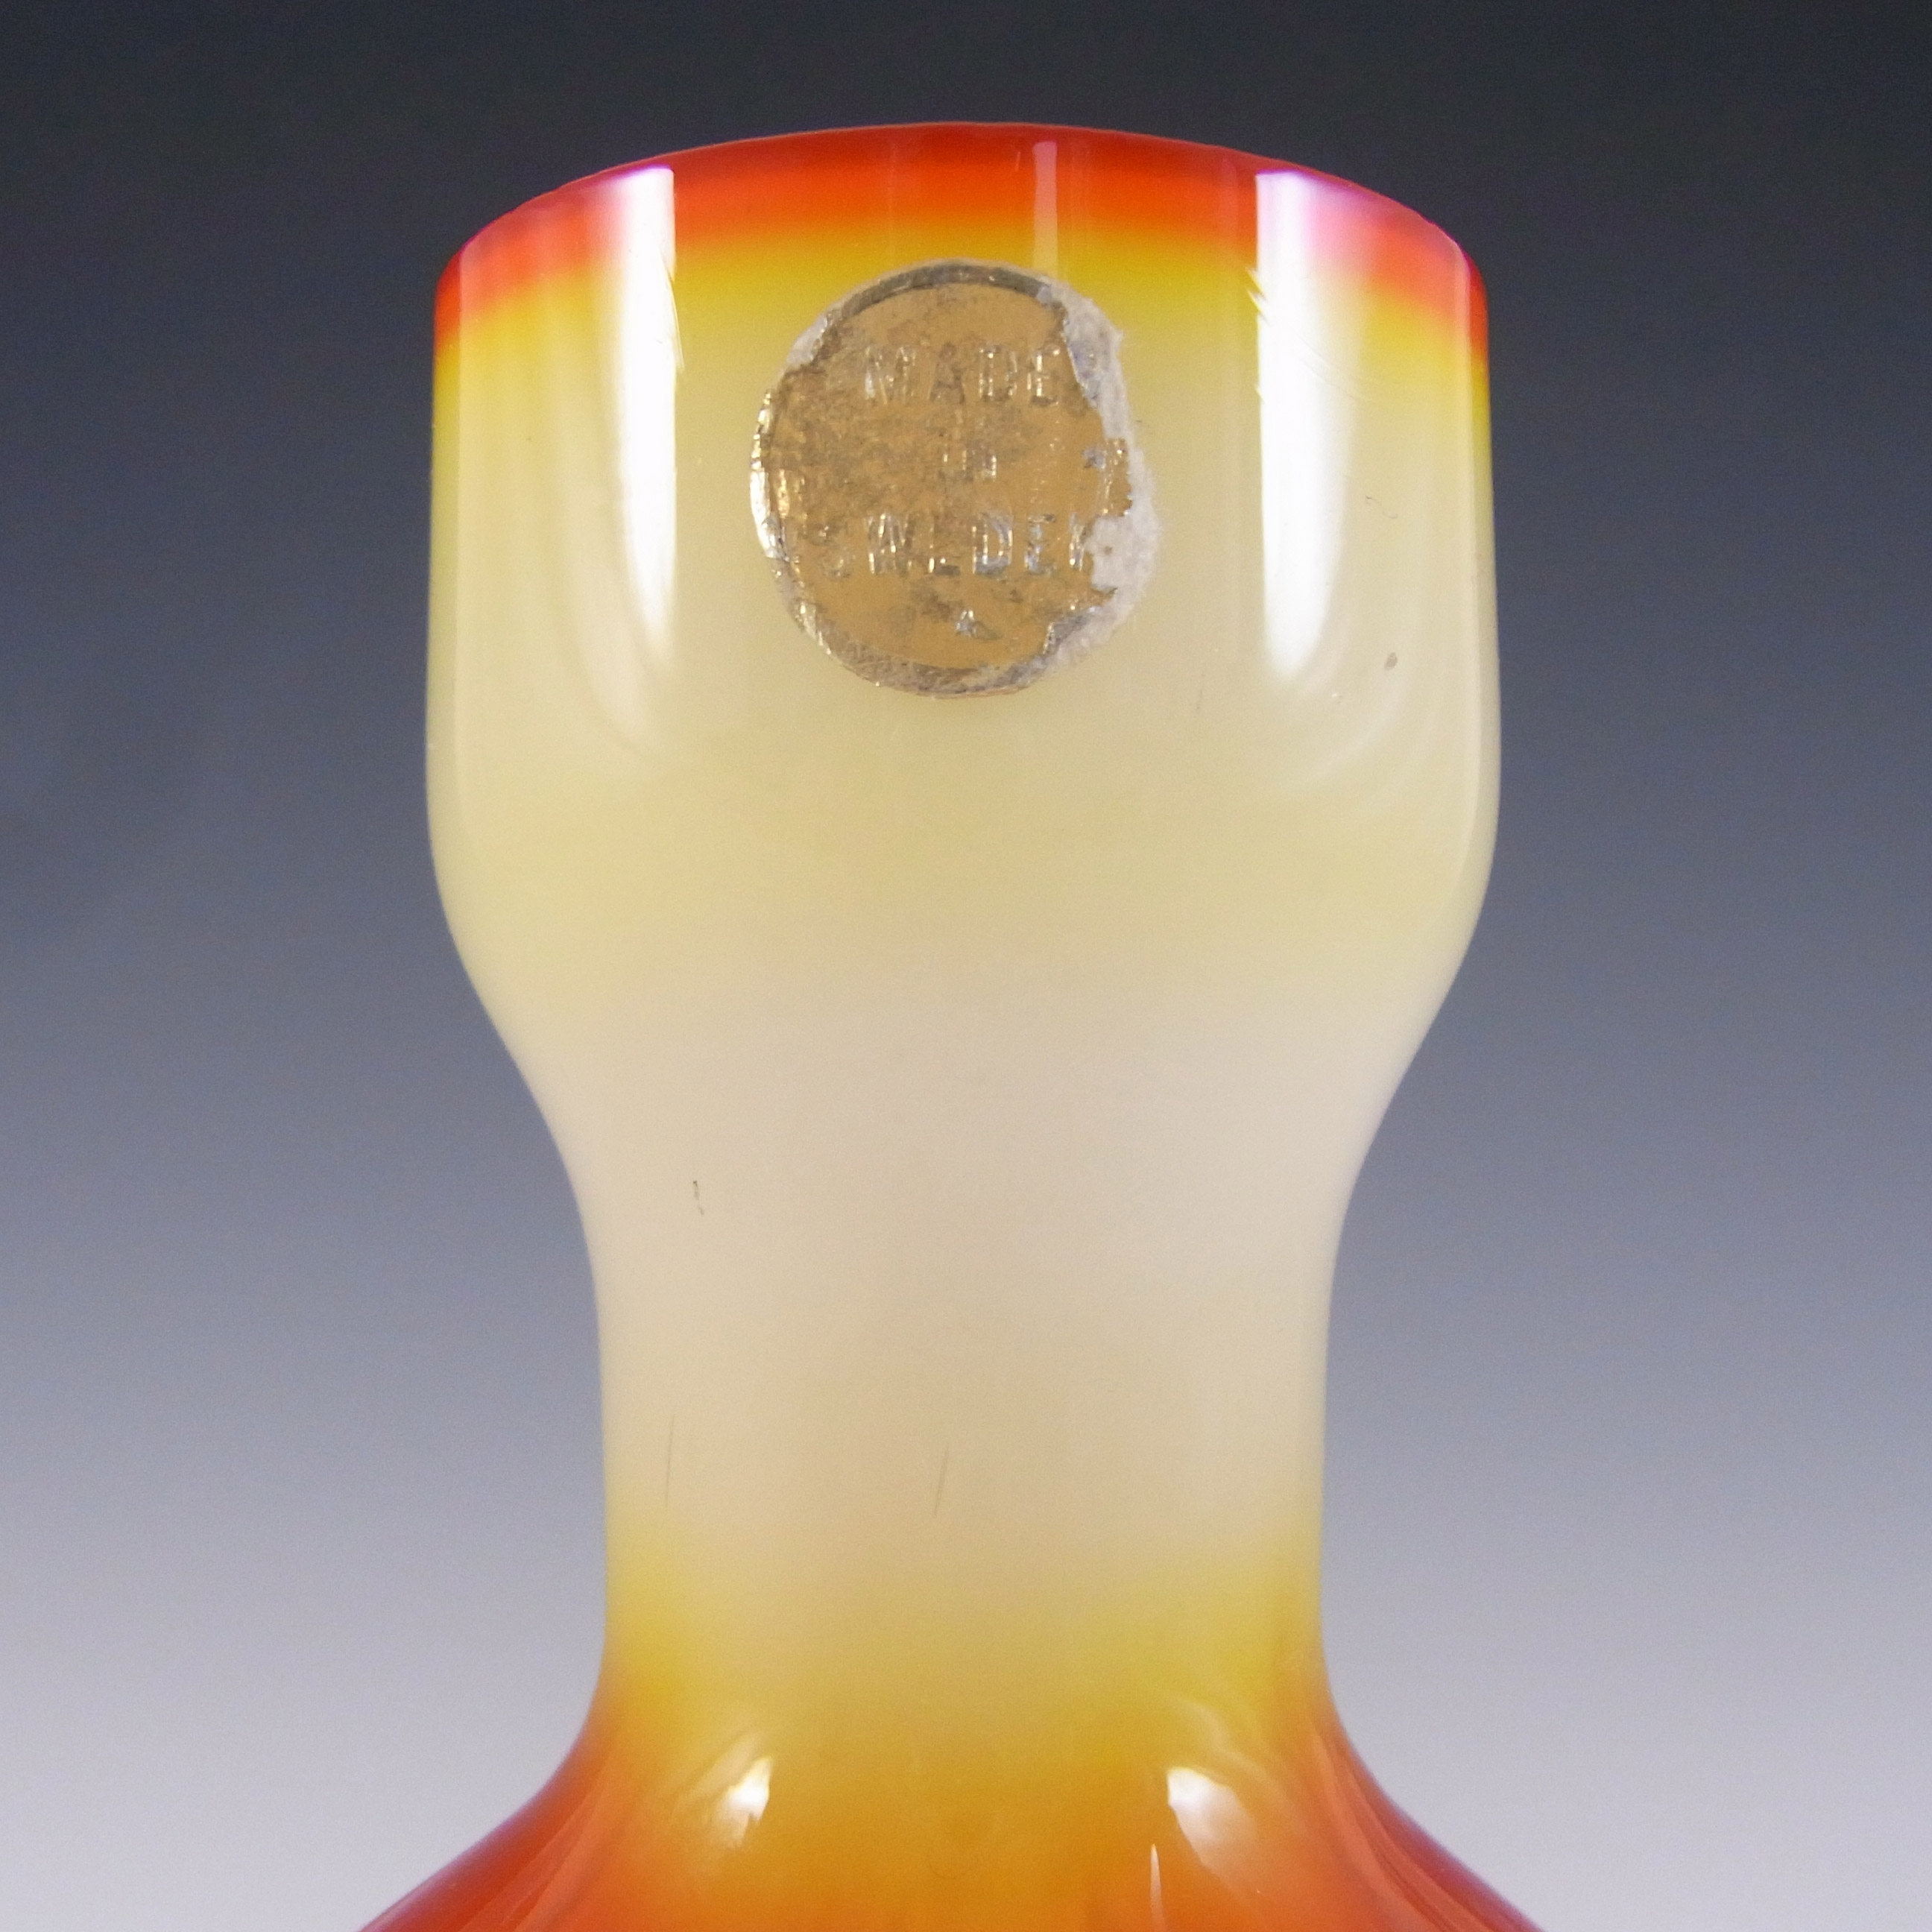 Elme Retro Scandinavian Orange Cased Glass Peacock Vase - Click Image to Close